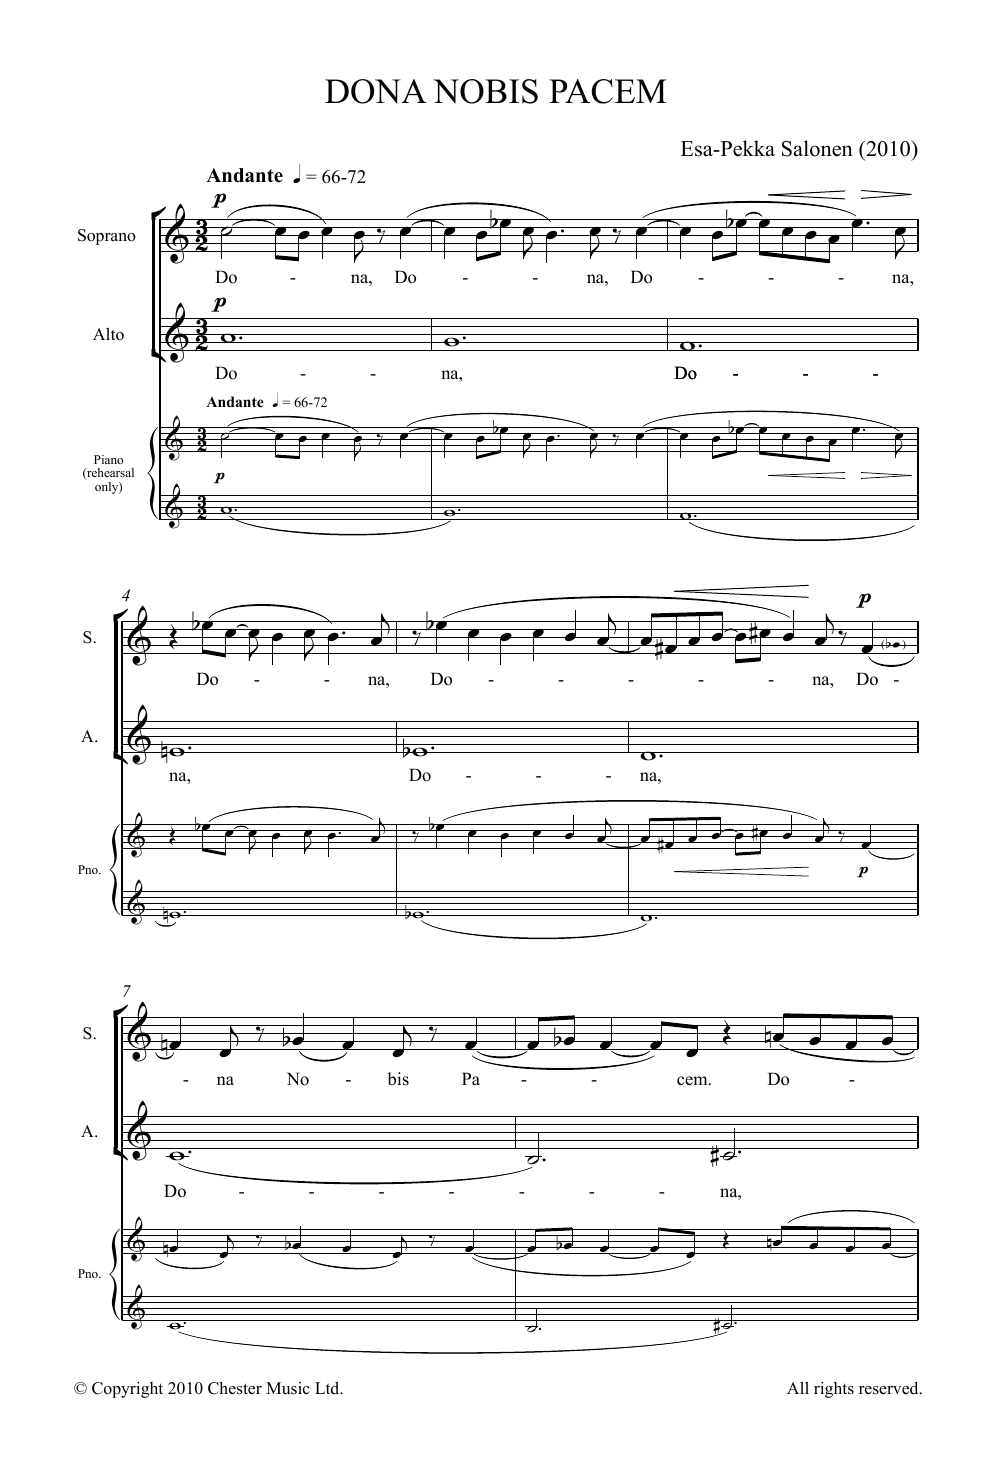 Esa-Pekka Salonen Dona Nobis Pacem Sheet Music Notes & Chords for Piano, Vocal & Guitar - Download or Print PDF